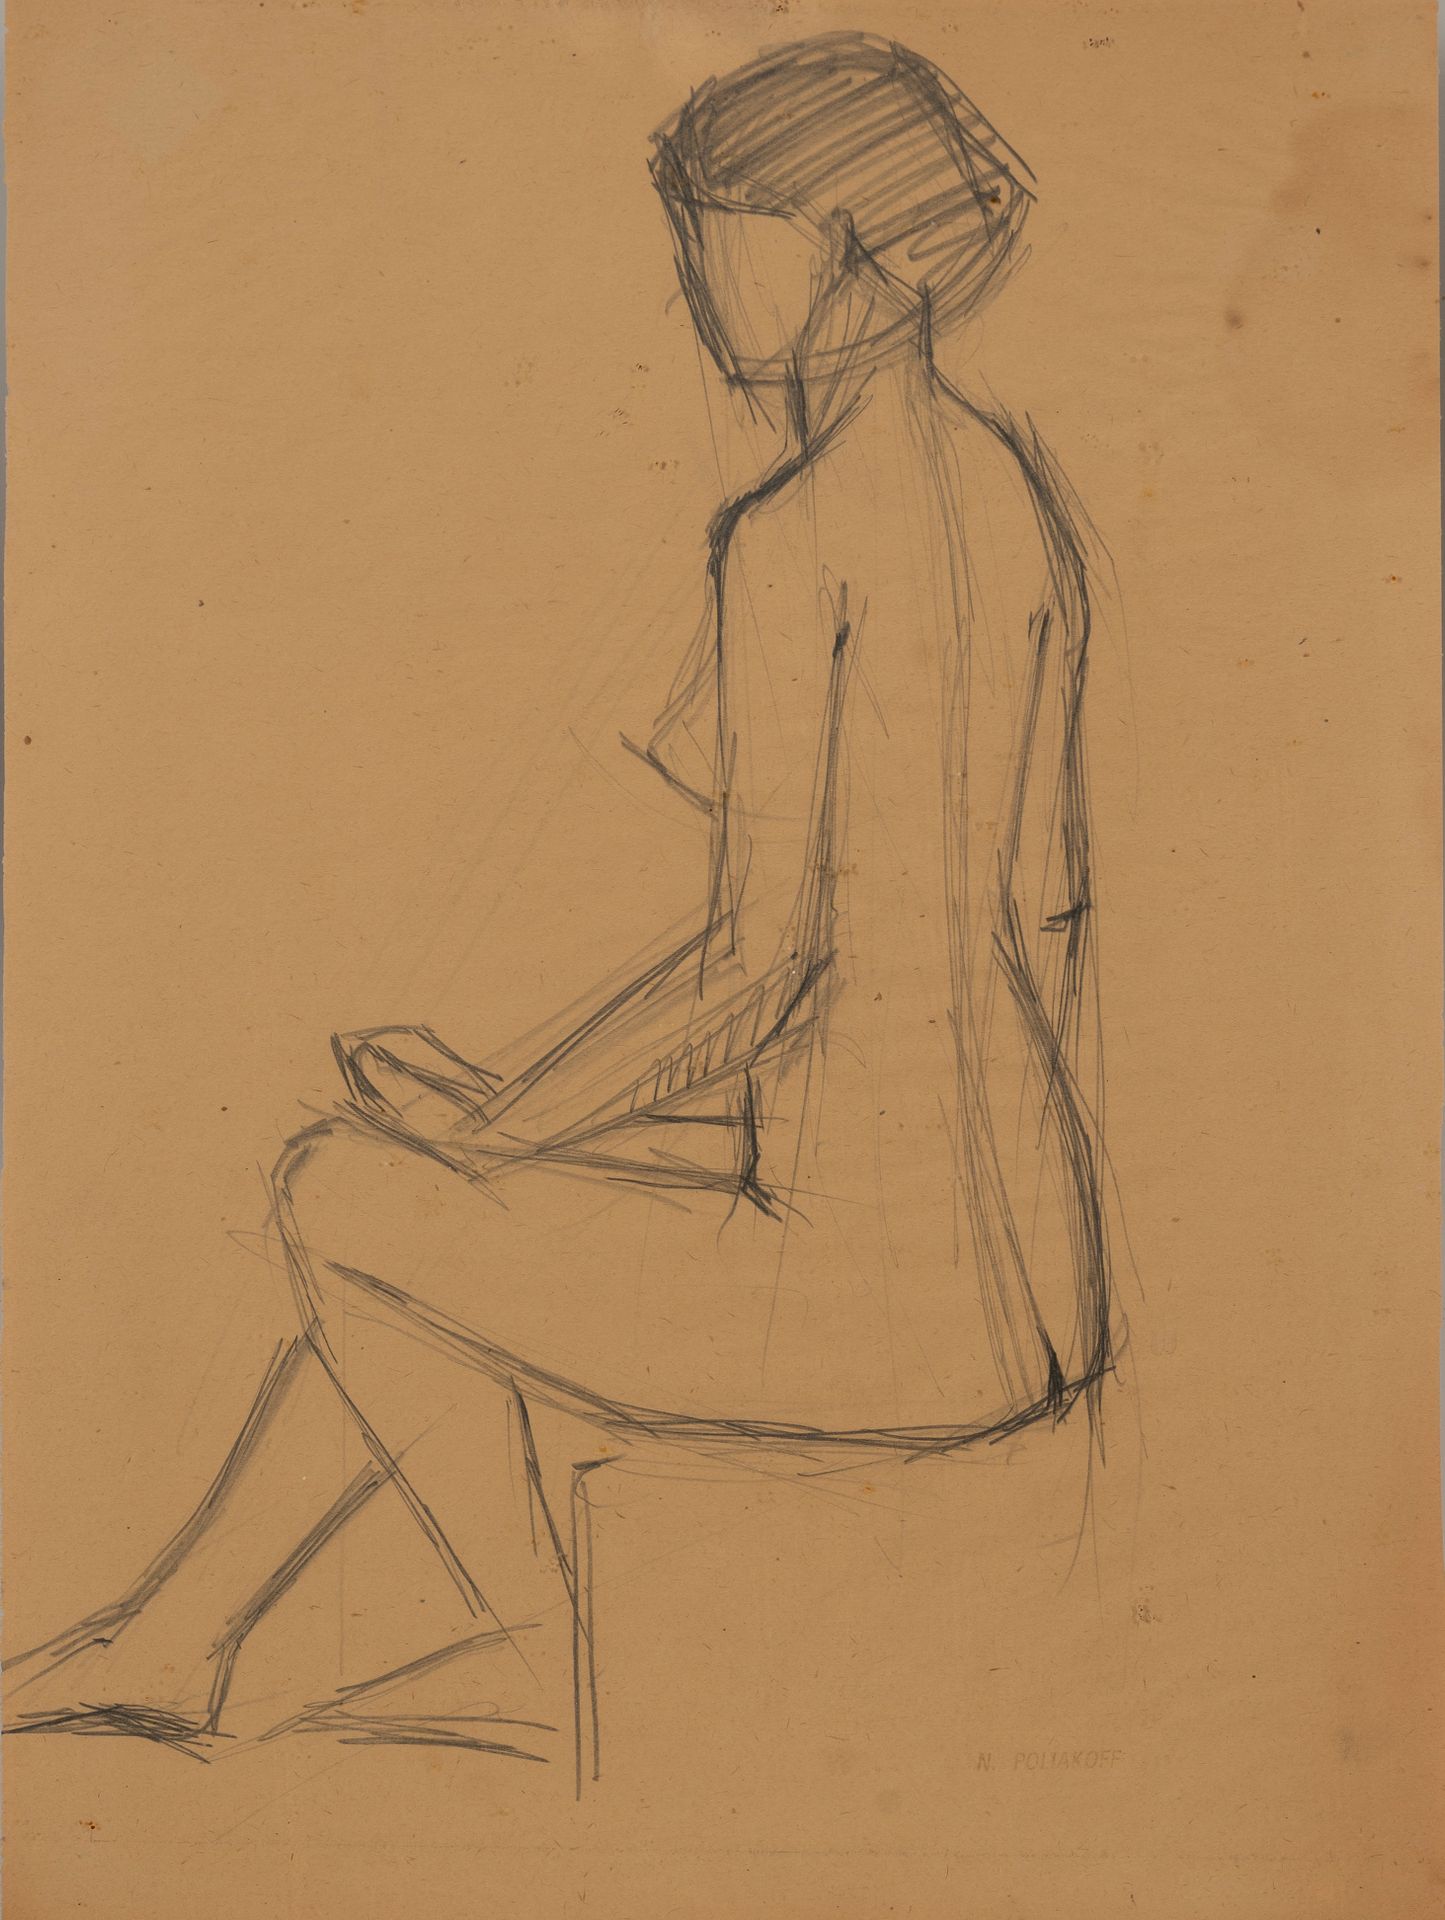 Null 尼古拉-波利亚科夫 (1899-1976)

裸体女人研究

铅笔画

右下方盖有印章。



污点，纸质绝缘。



40 x 29 cm